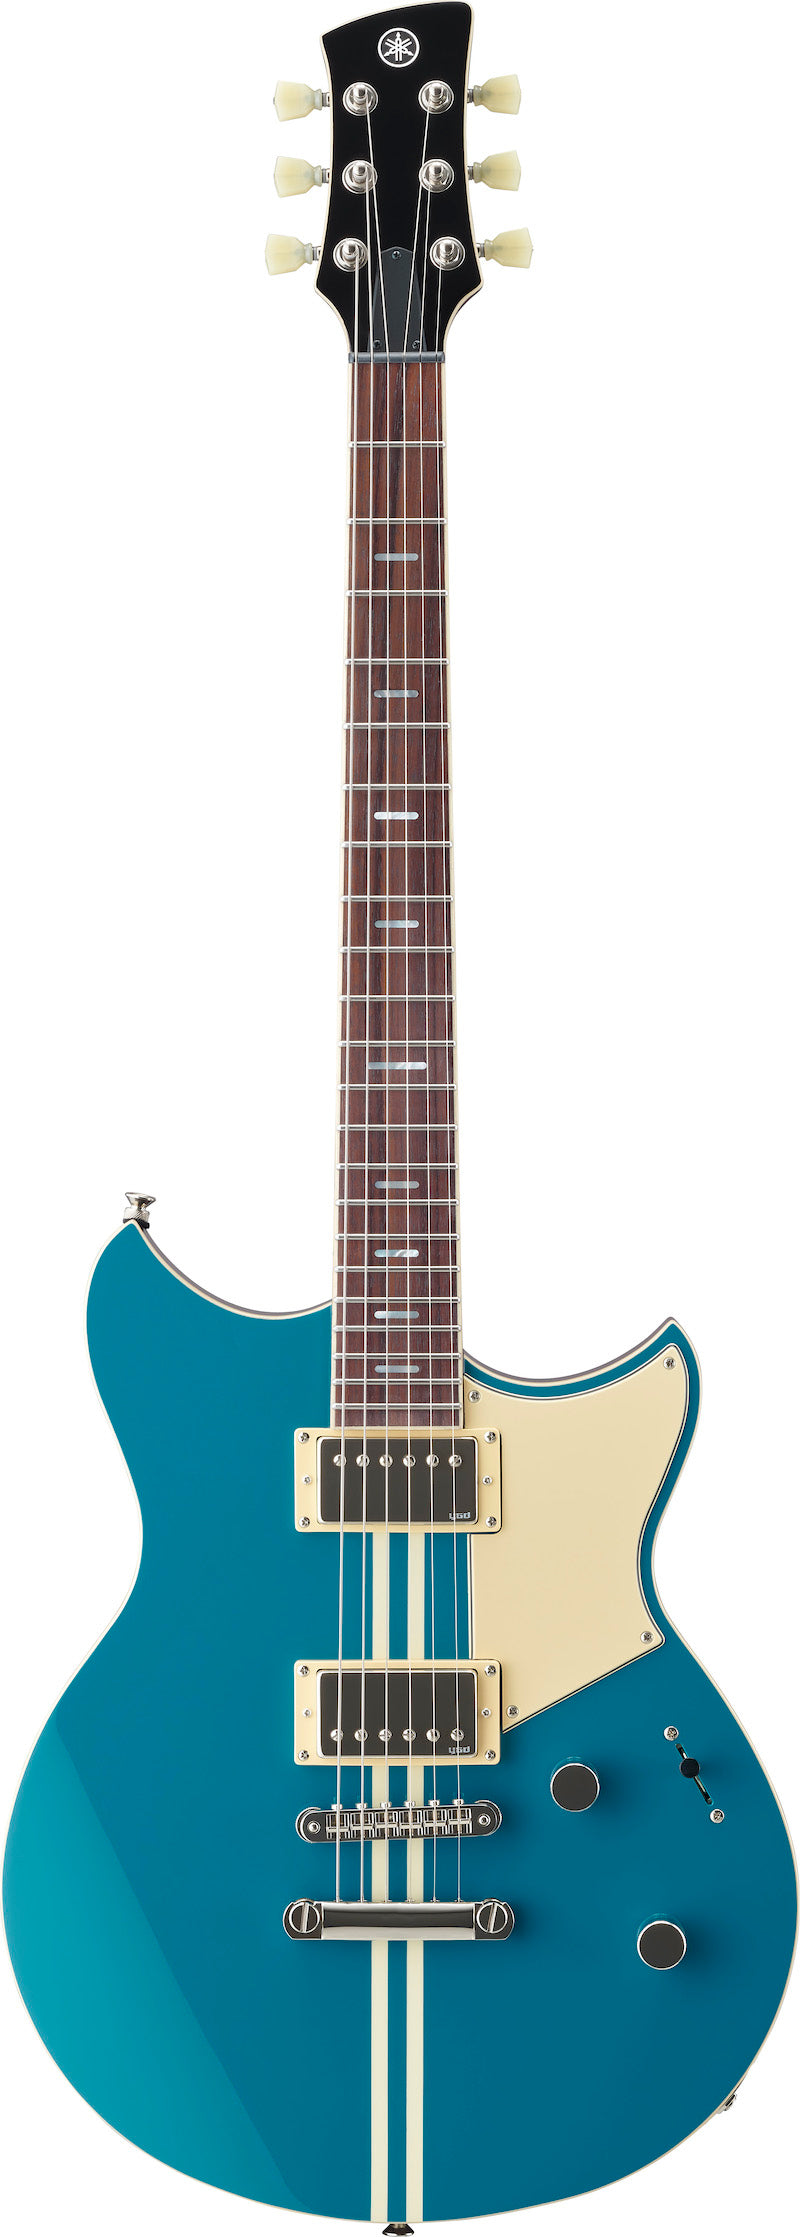 Yamaha Revstar RSS20 SWB Electric Guitar - Swift Blue